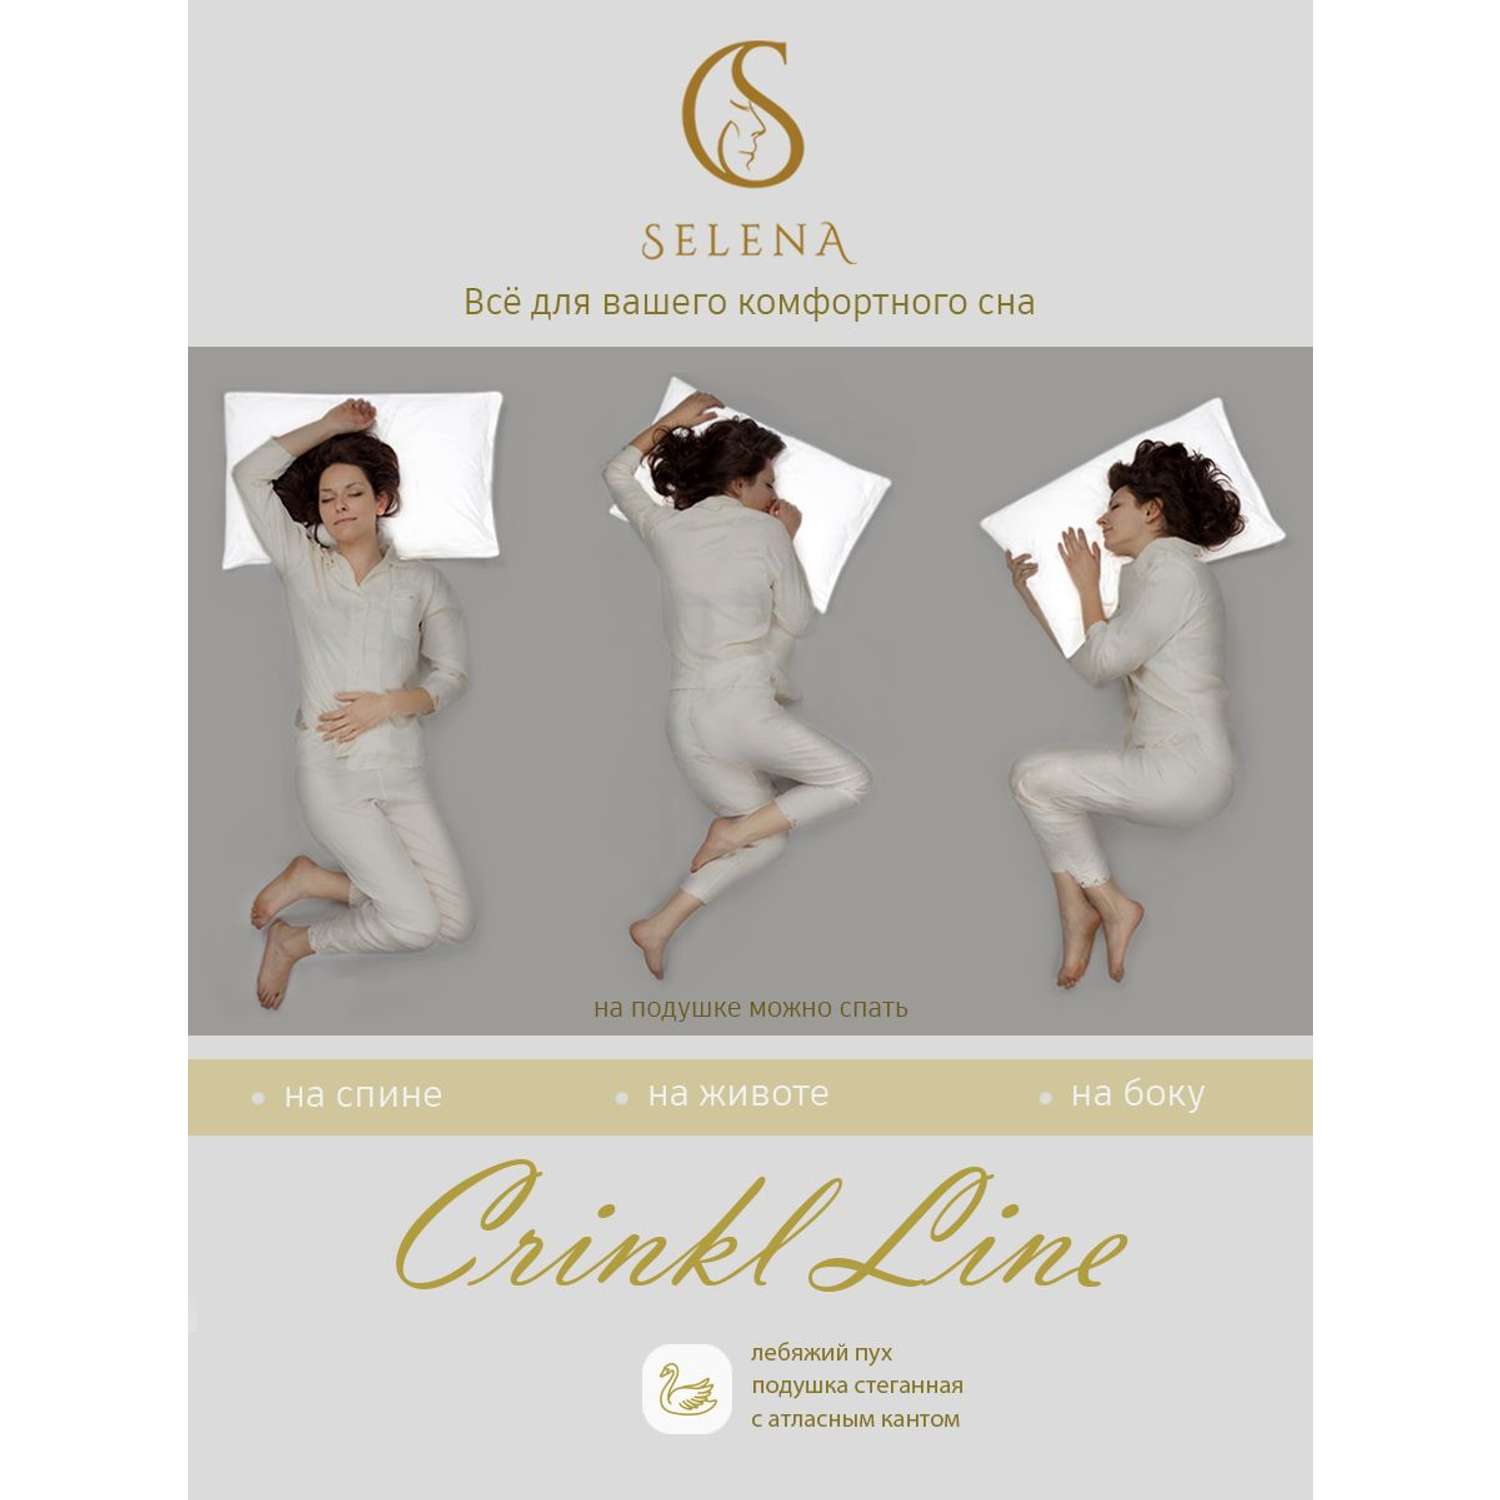 Одеяло Selena Crinkle line 140х205 см с наполнителем Лебяжий пух бежевое - фото 8